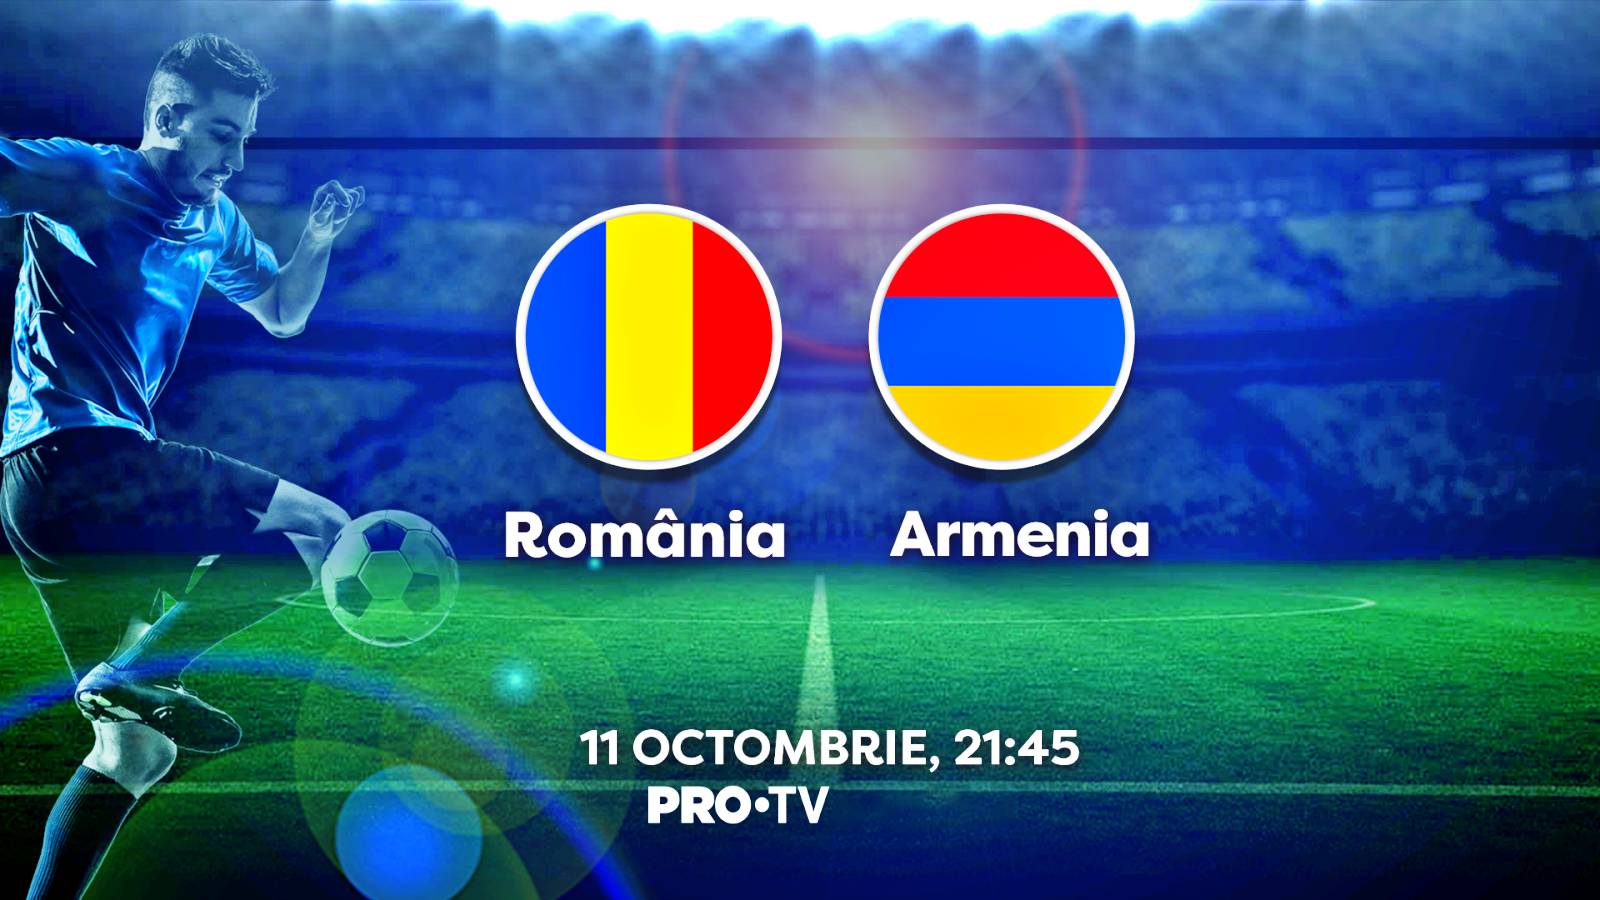 ROMANIA - ARMENIA LIVE PRO TV